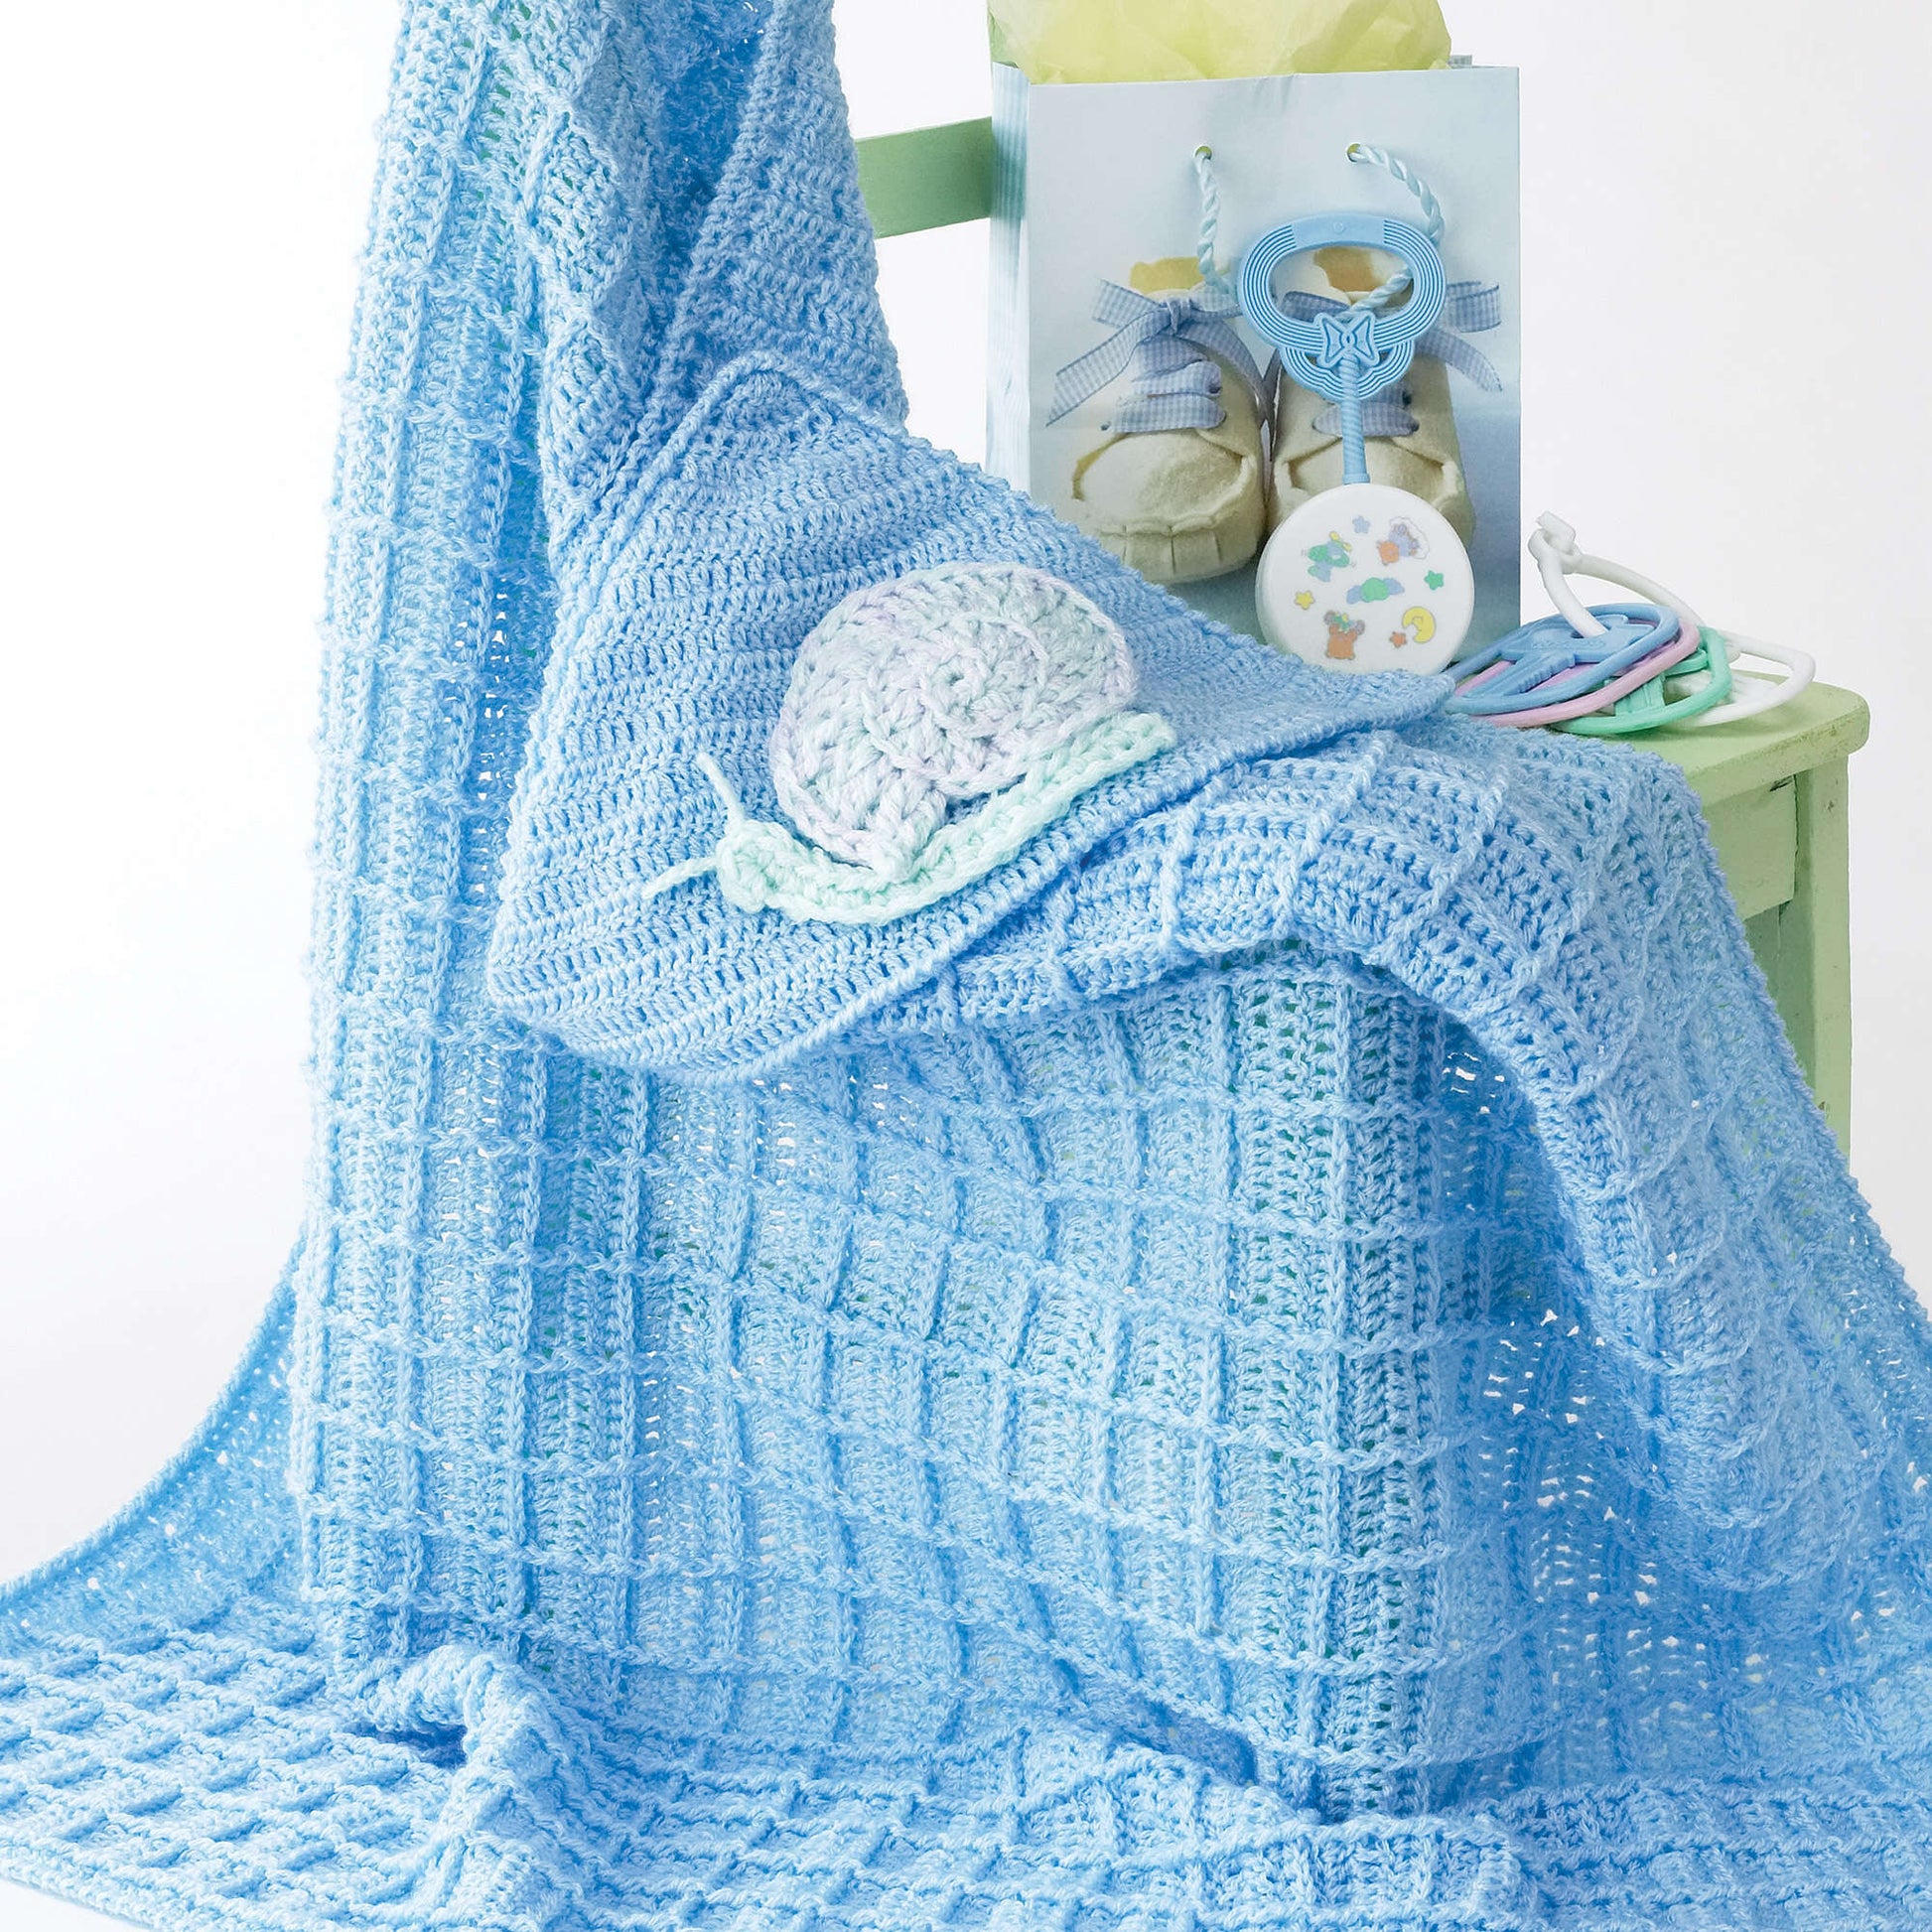 Bernat Snail Crochet Blanket Crochet Blanket made in Bernat Baby yarn